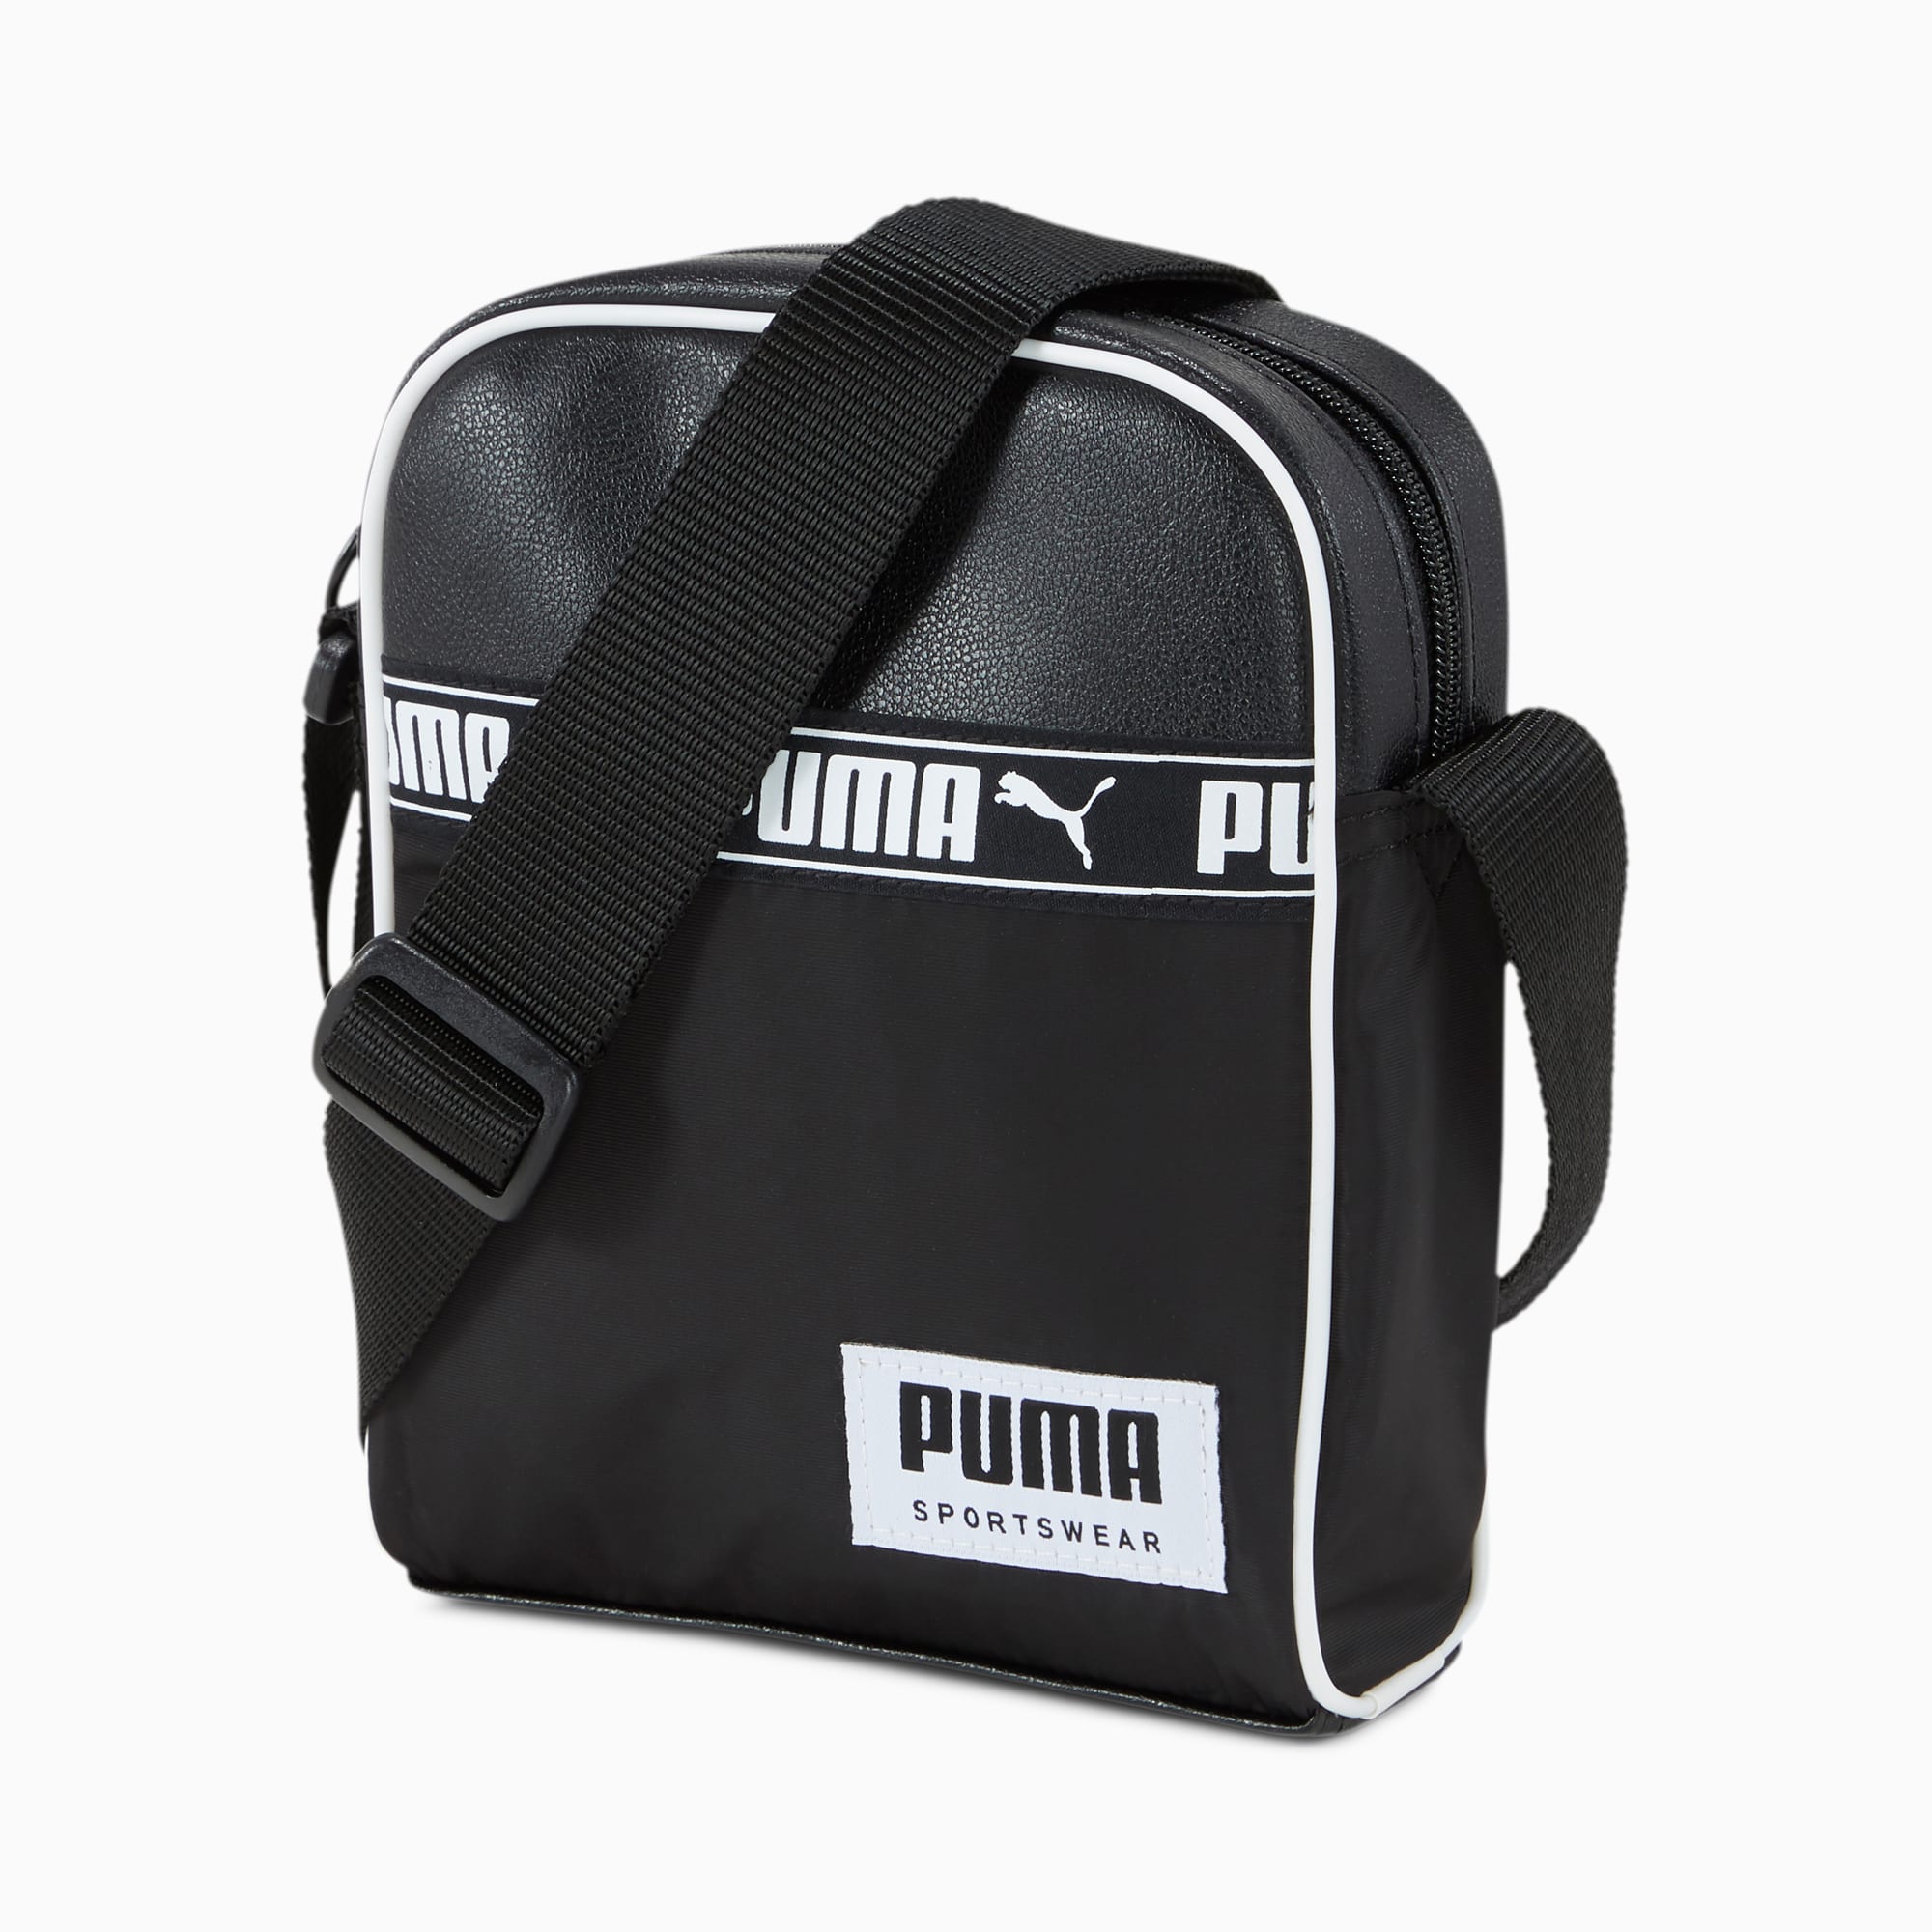 Мужская сумка пума. Сумка Puma Campus Portable. Сумка Campus Portable PU Puma. Сумка Пума портэйбл. Сумка Puma mapf1 Portable.